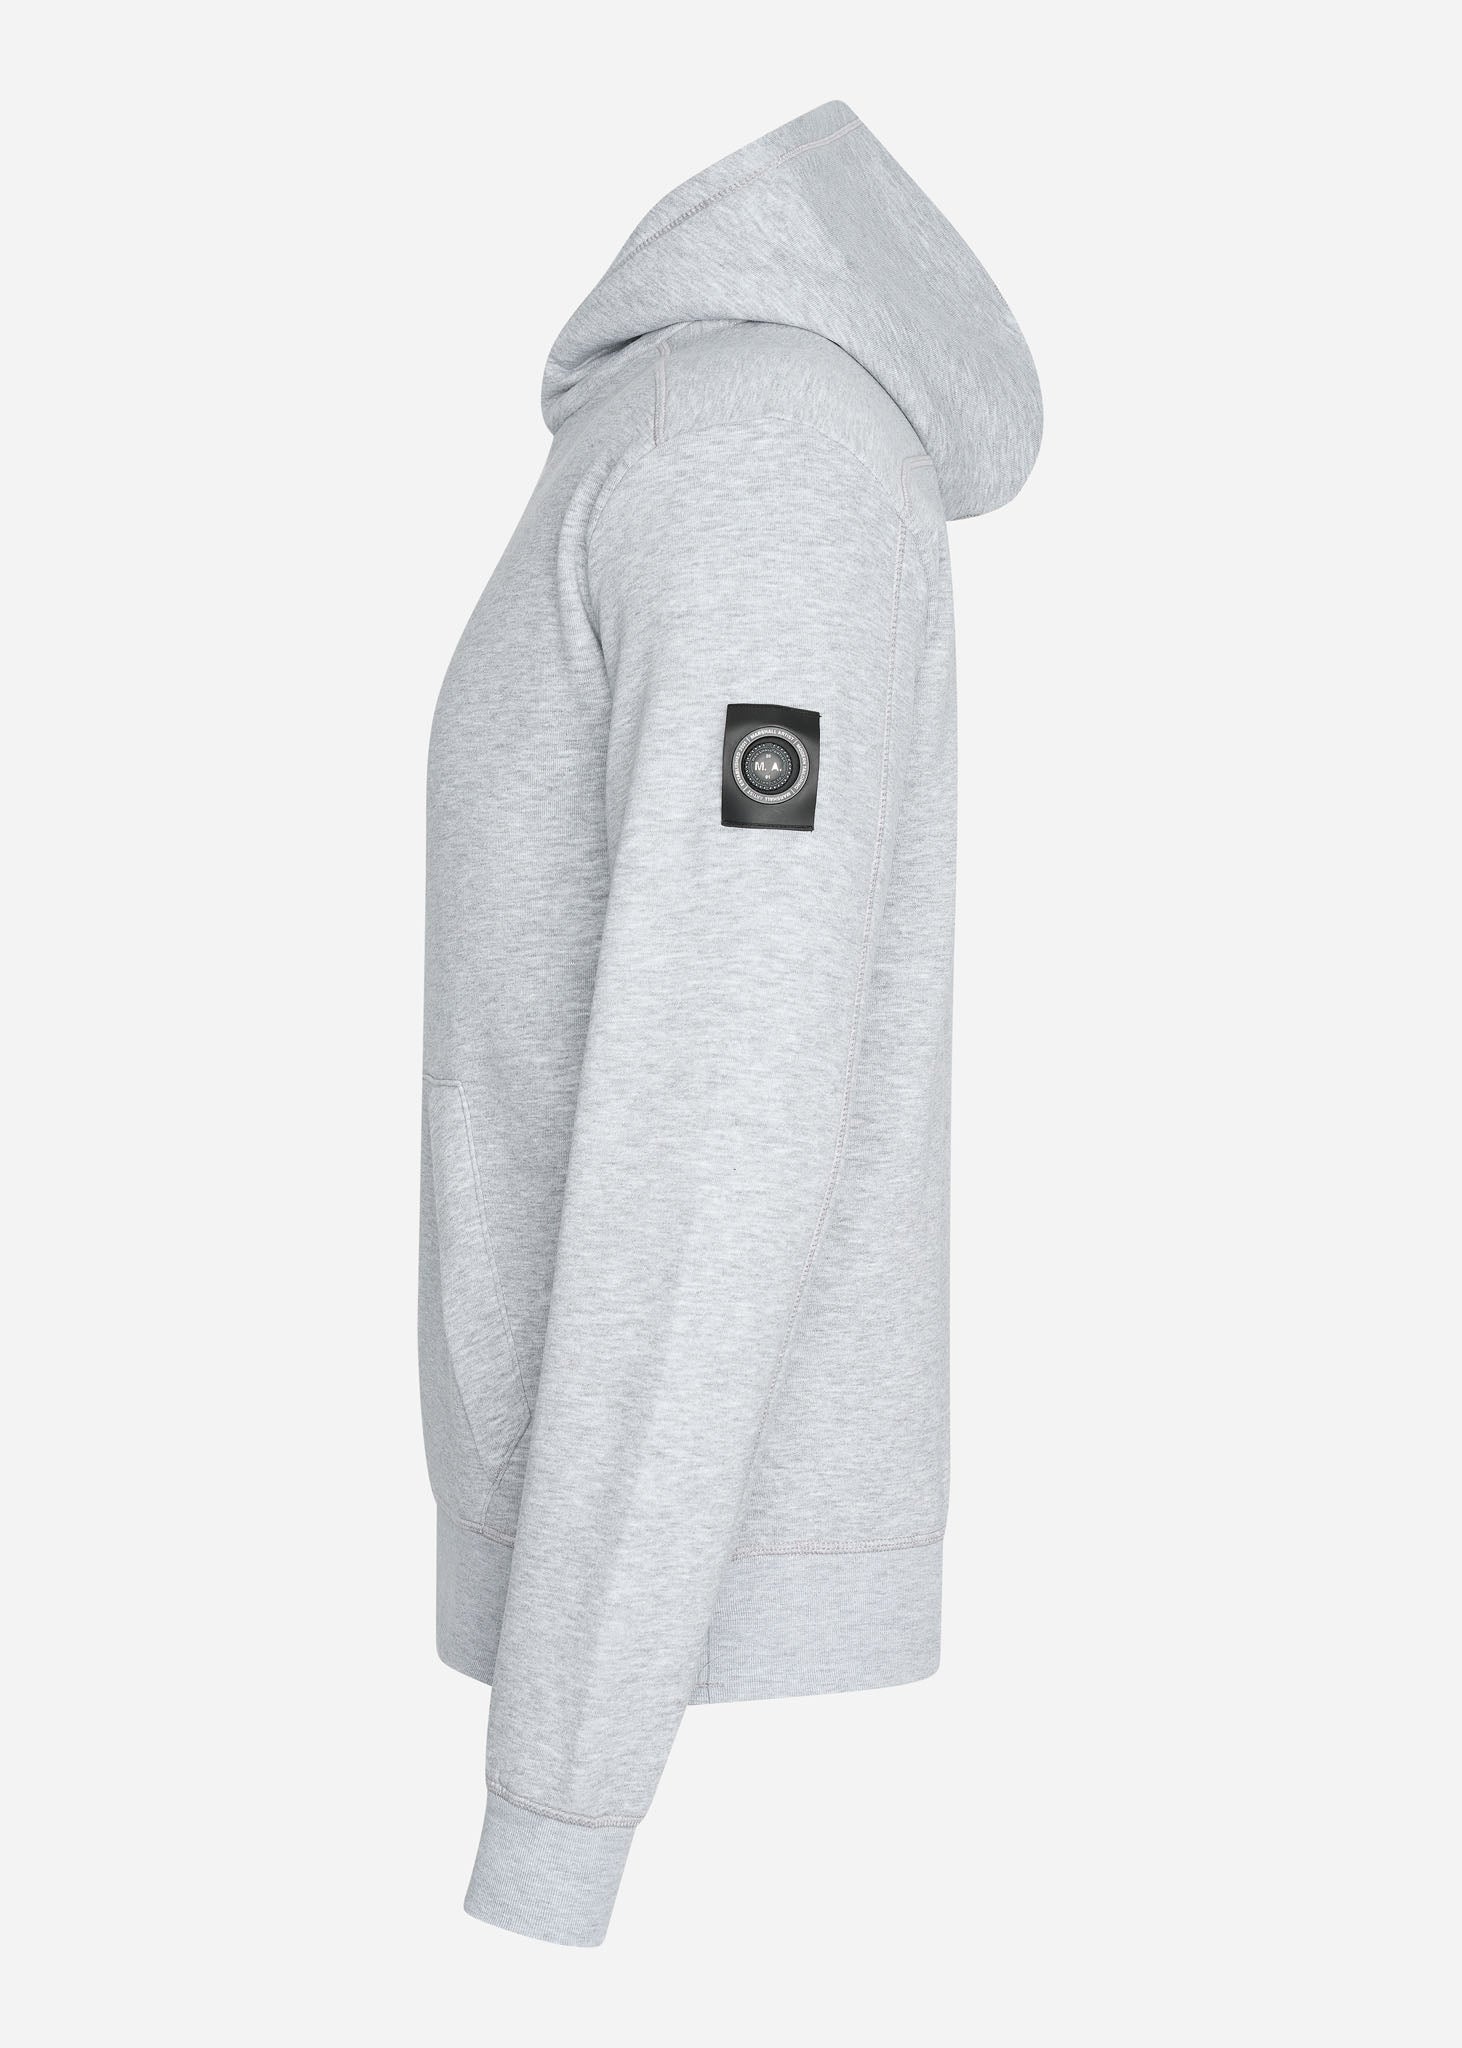 Marshall Artist hoodie grey